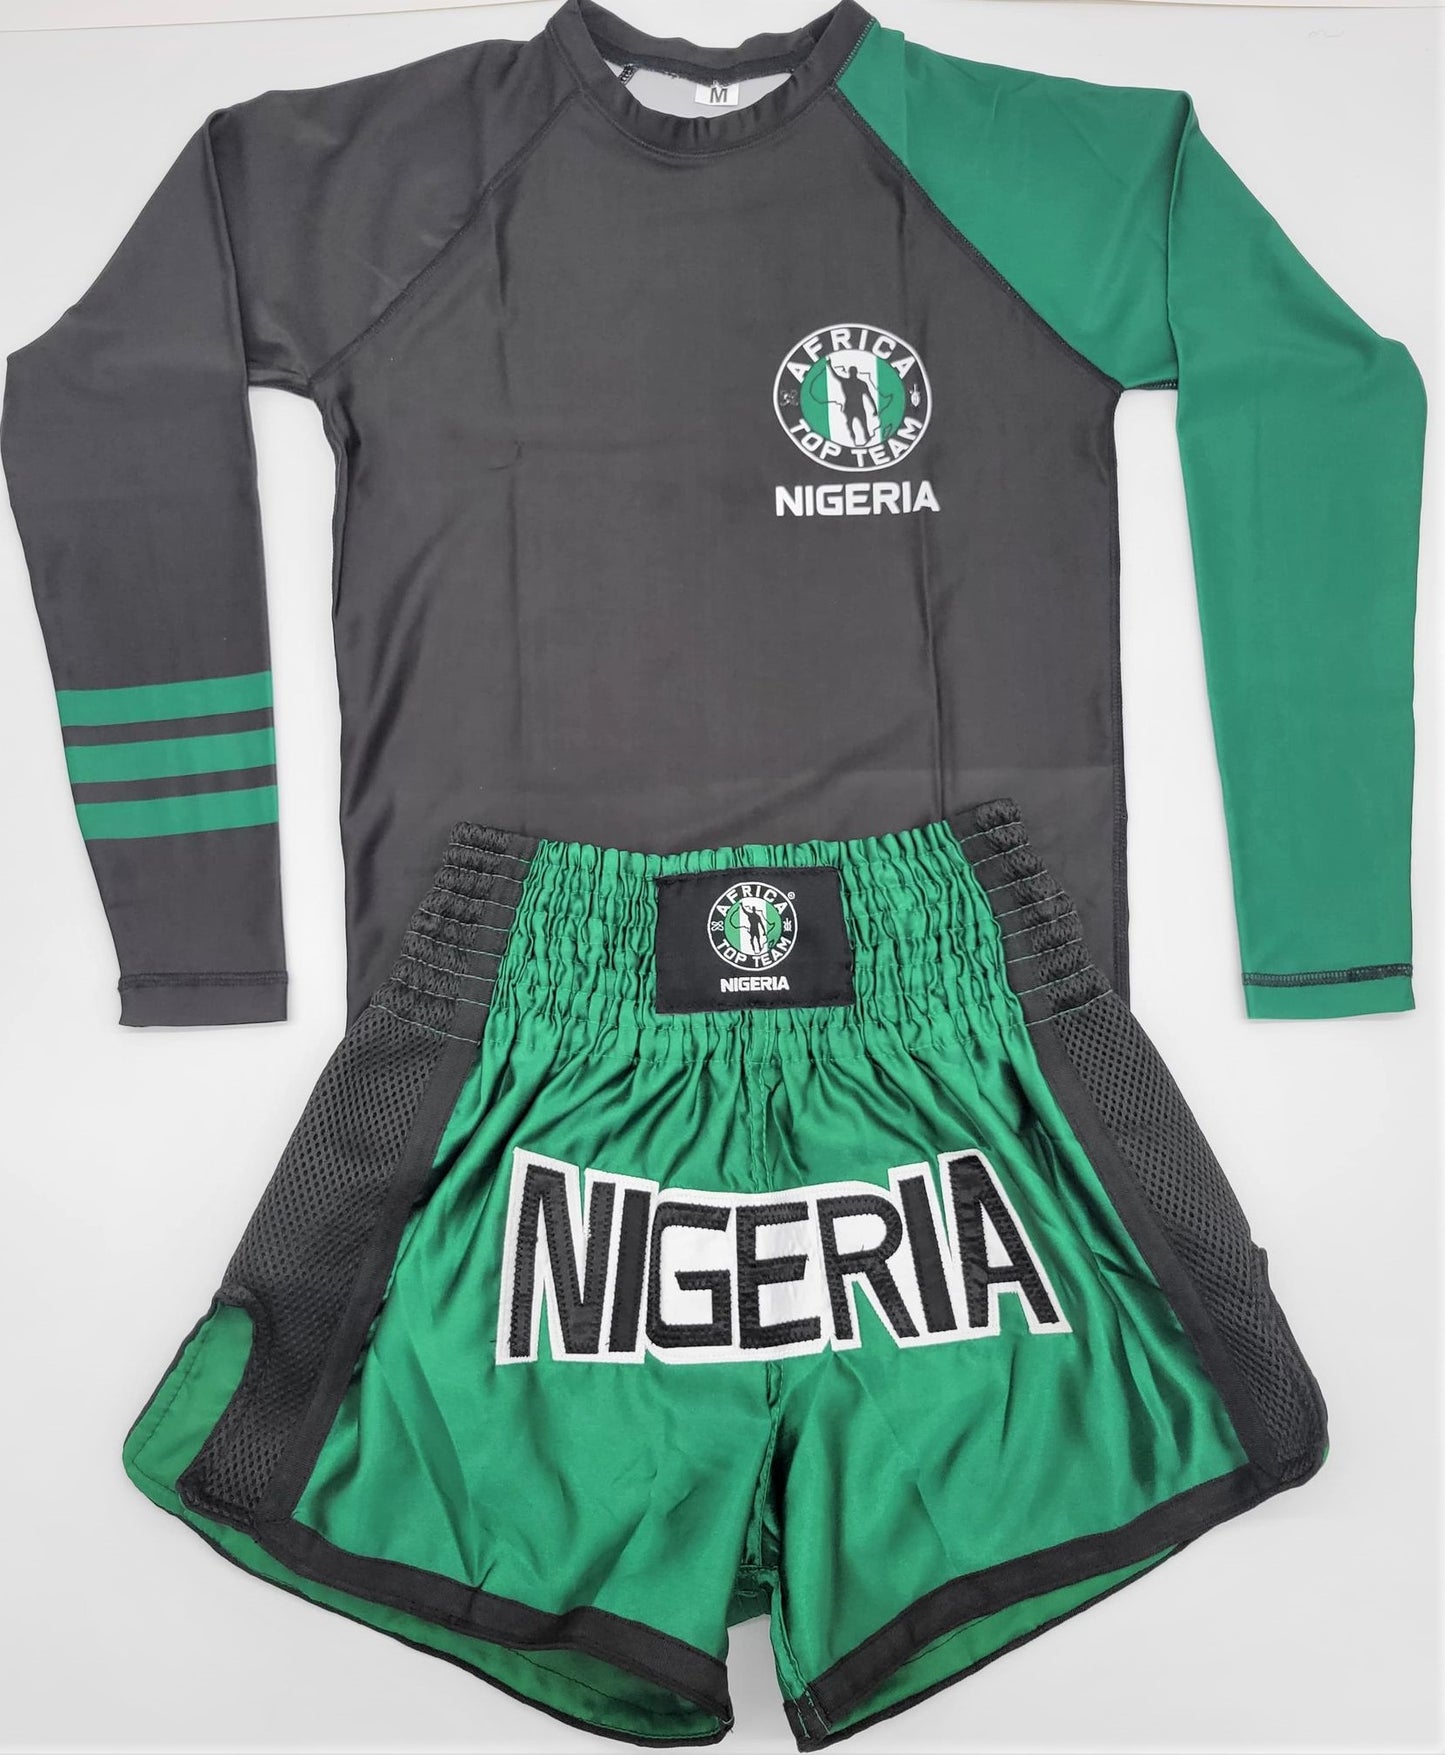 Africa Top Team Nigeria Green/Black Rash guard MMA, Boxing